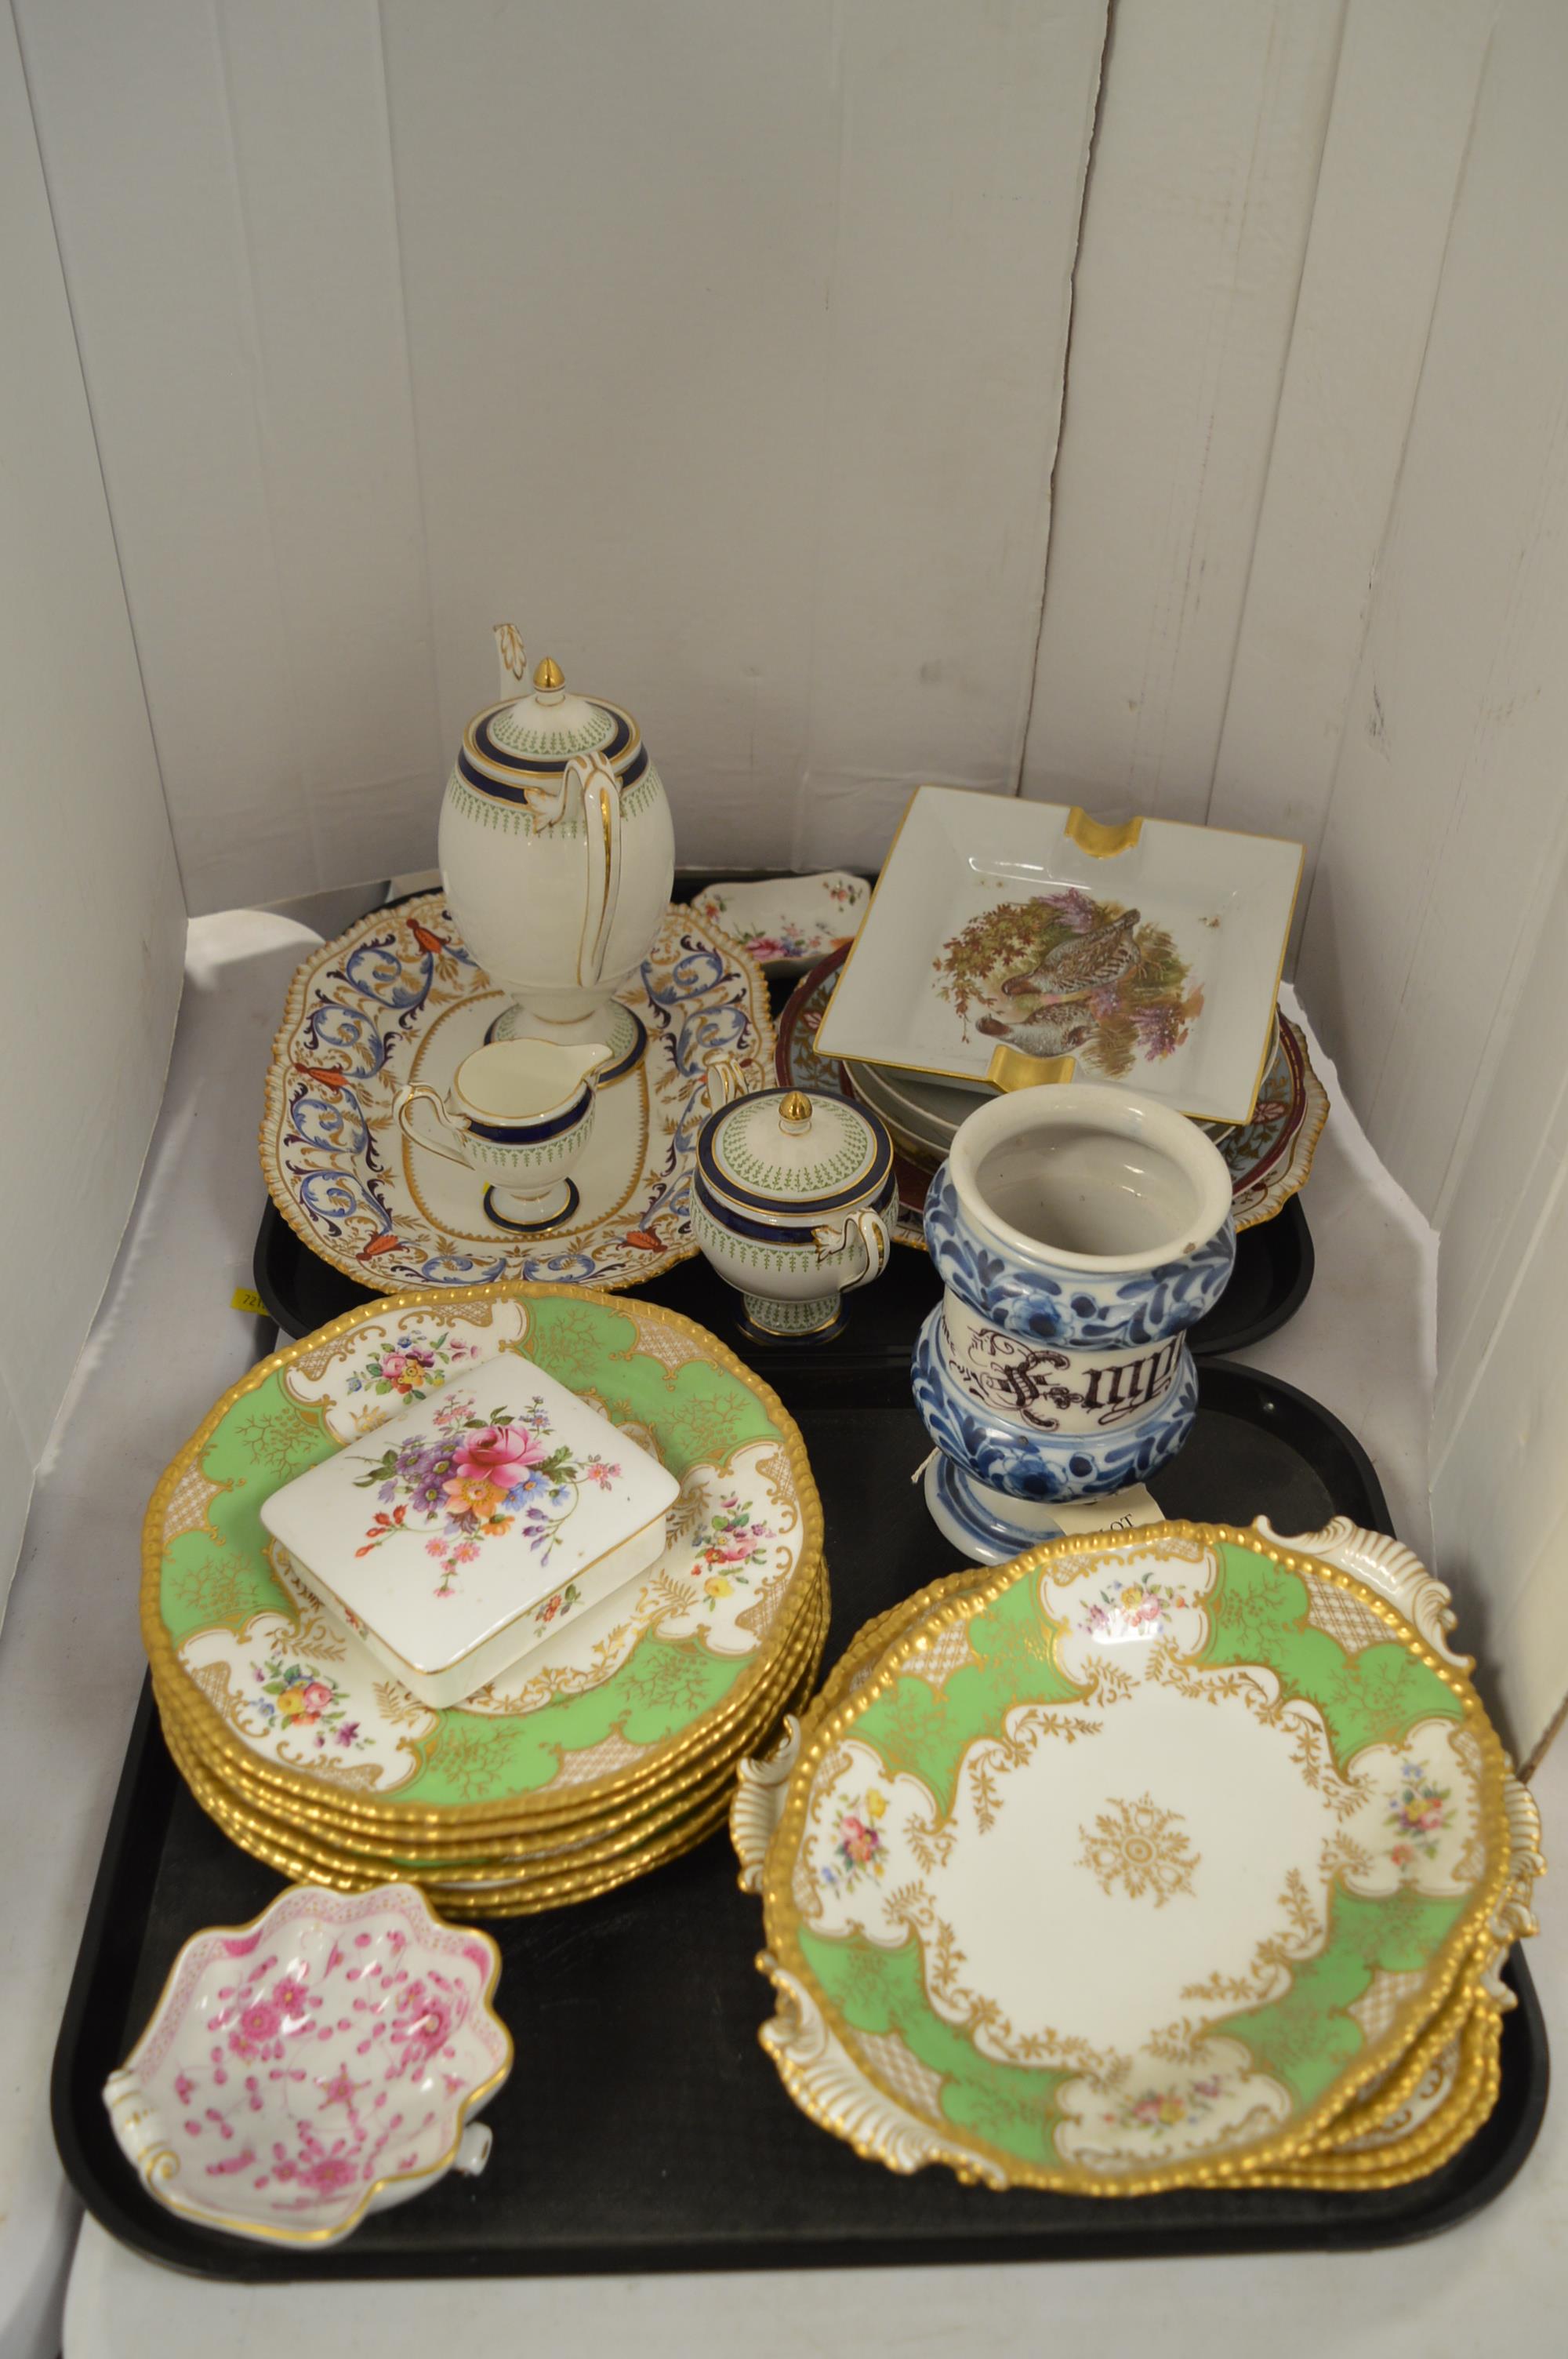 Mixed ceramics including Coalport, Wedgwood Maiolica and Limoges